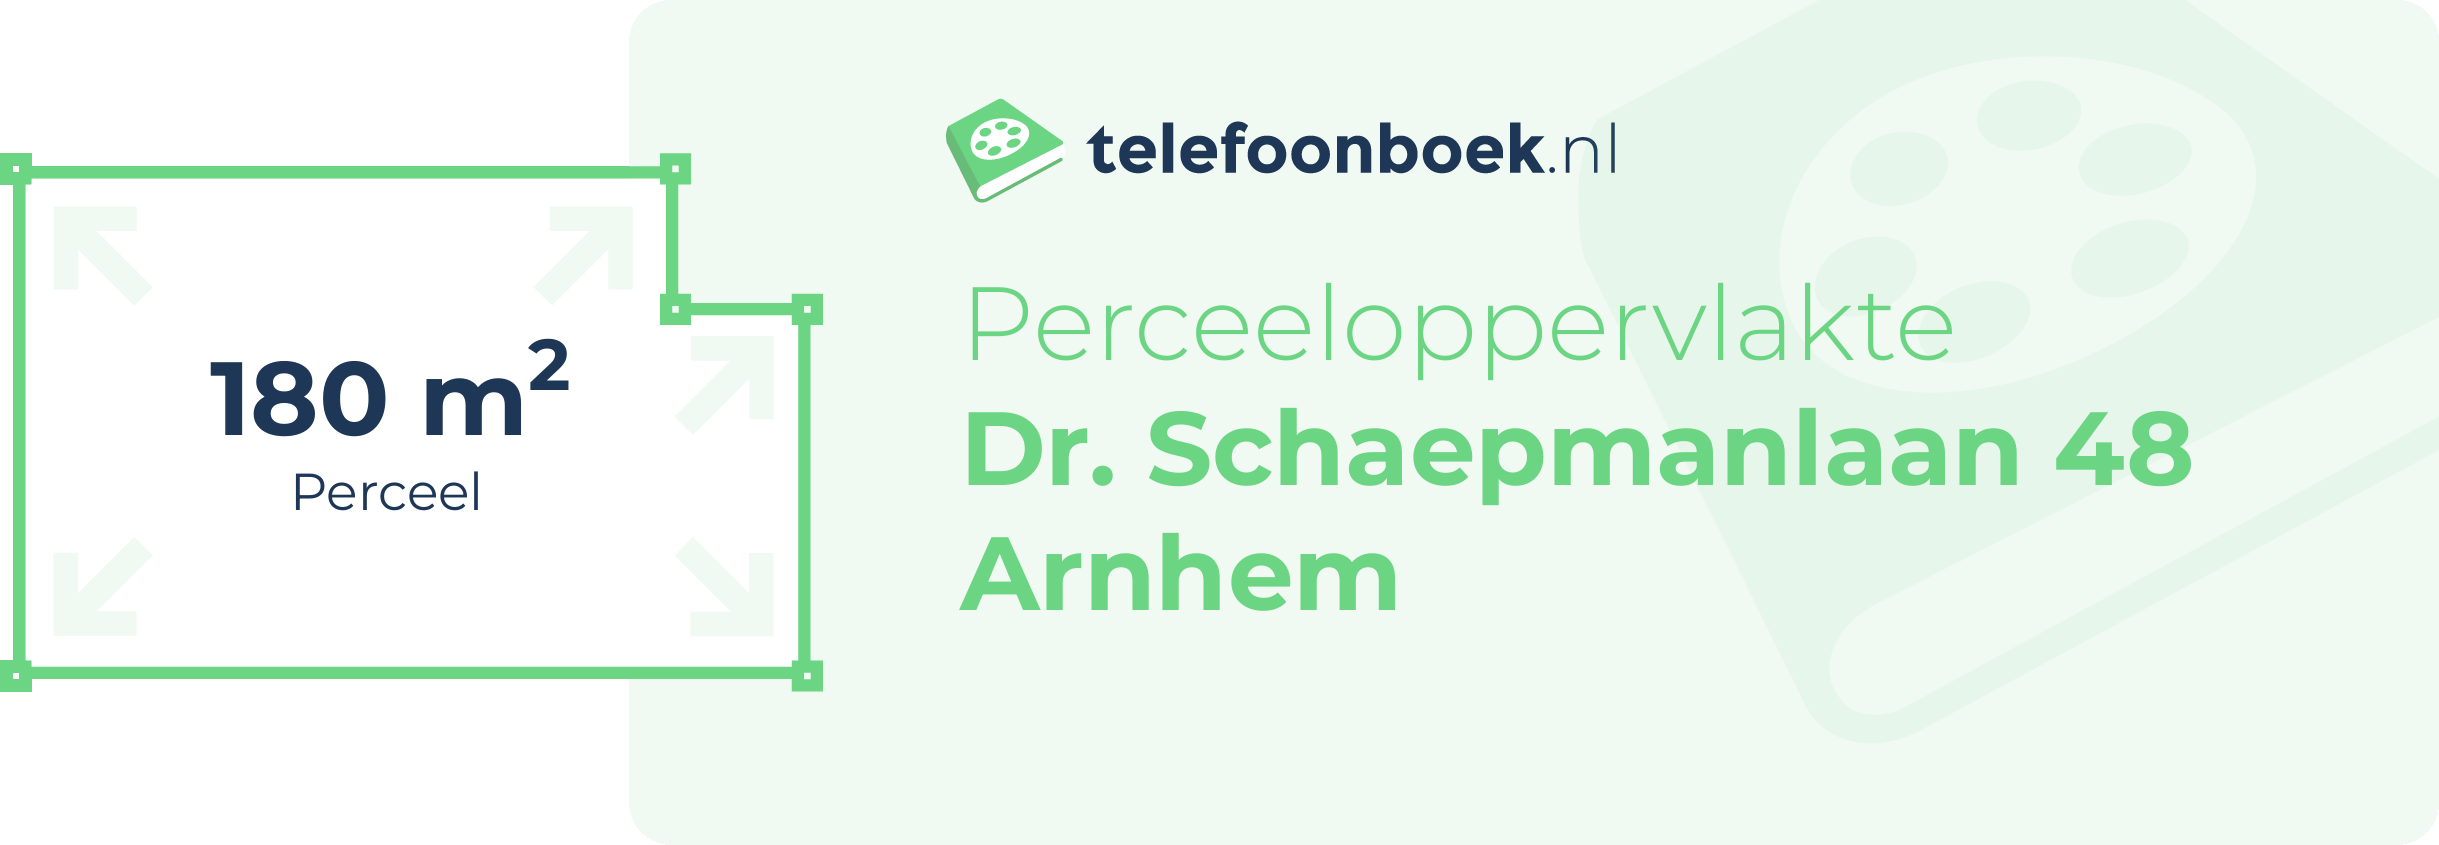 Perceeloppervlakte Dr. Schaepmanlaan 48 Arnhem